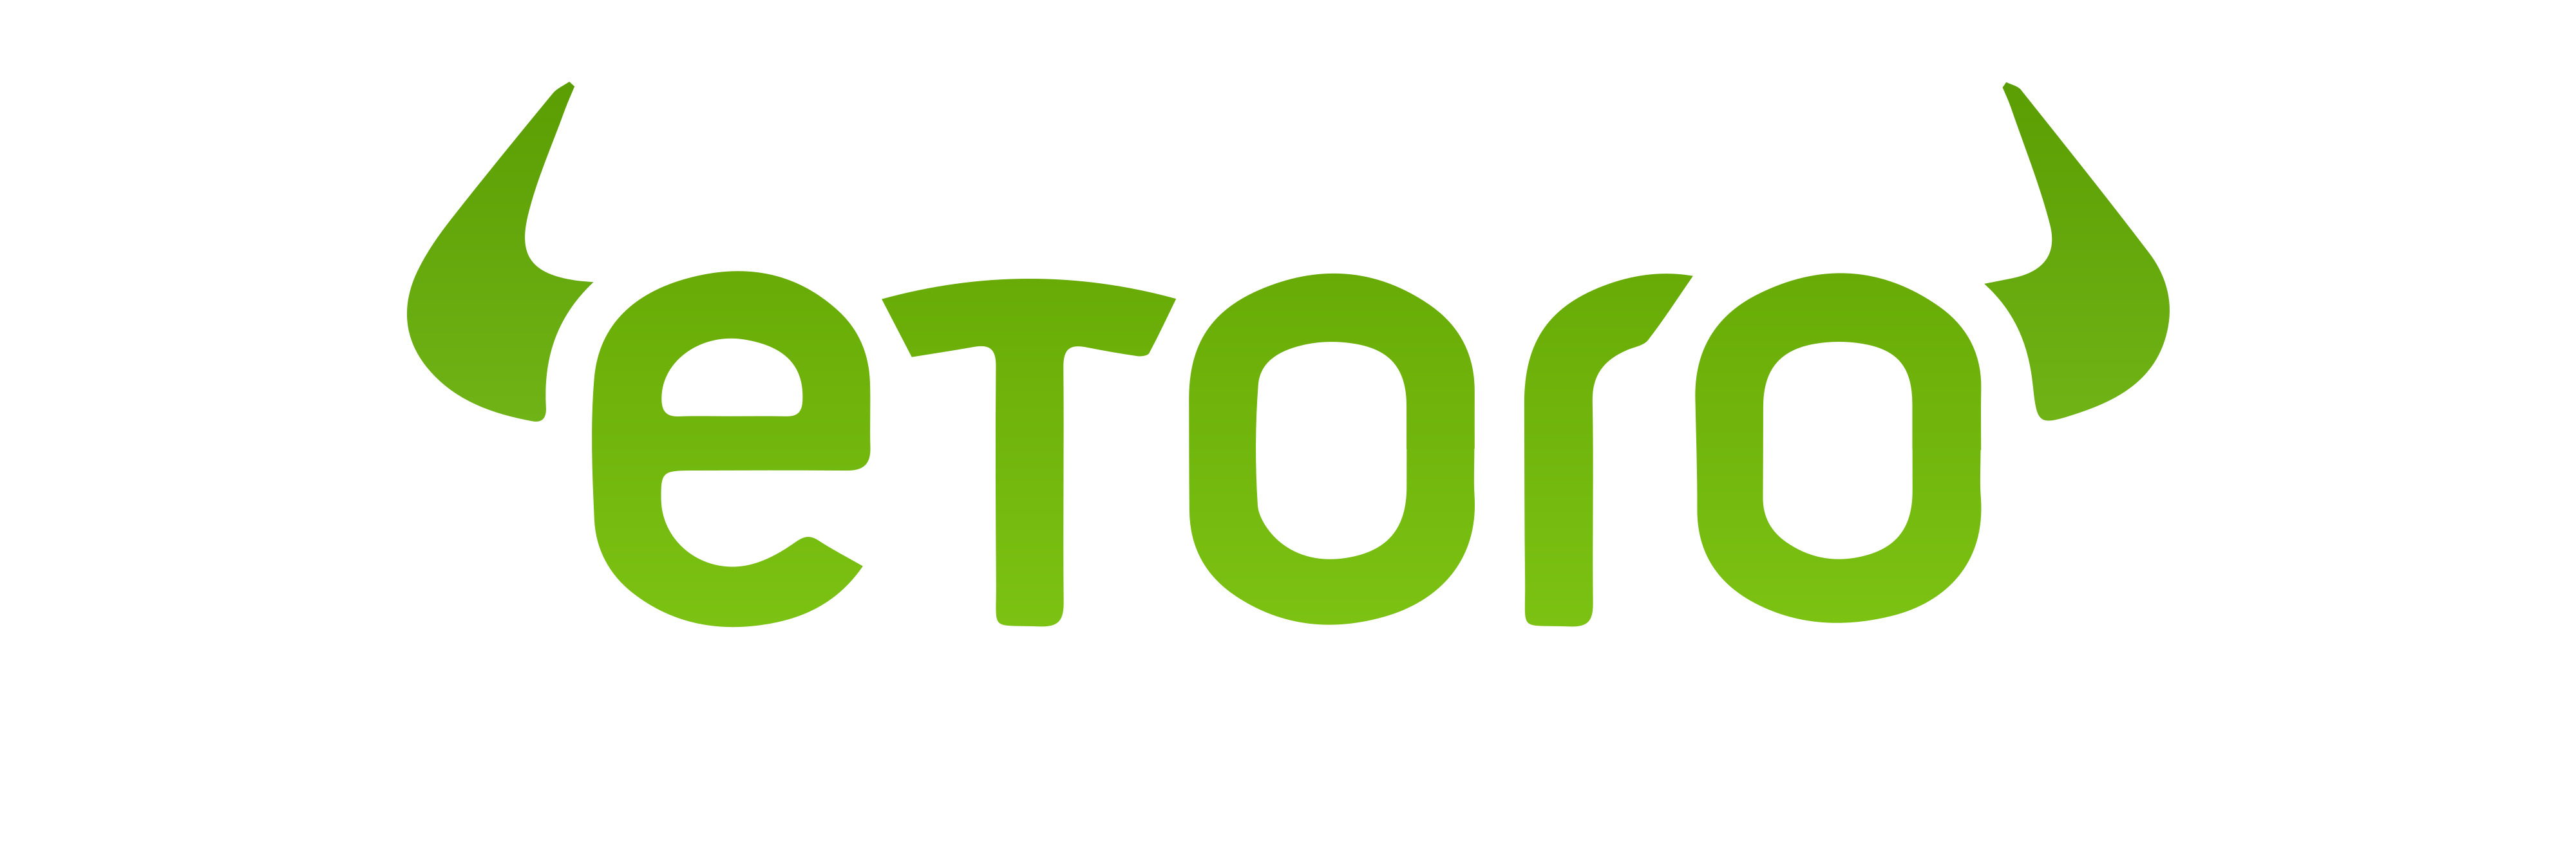 eToro logo - download.